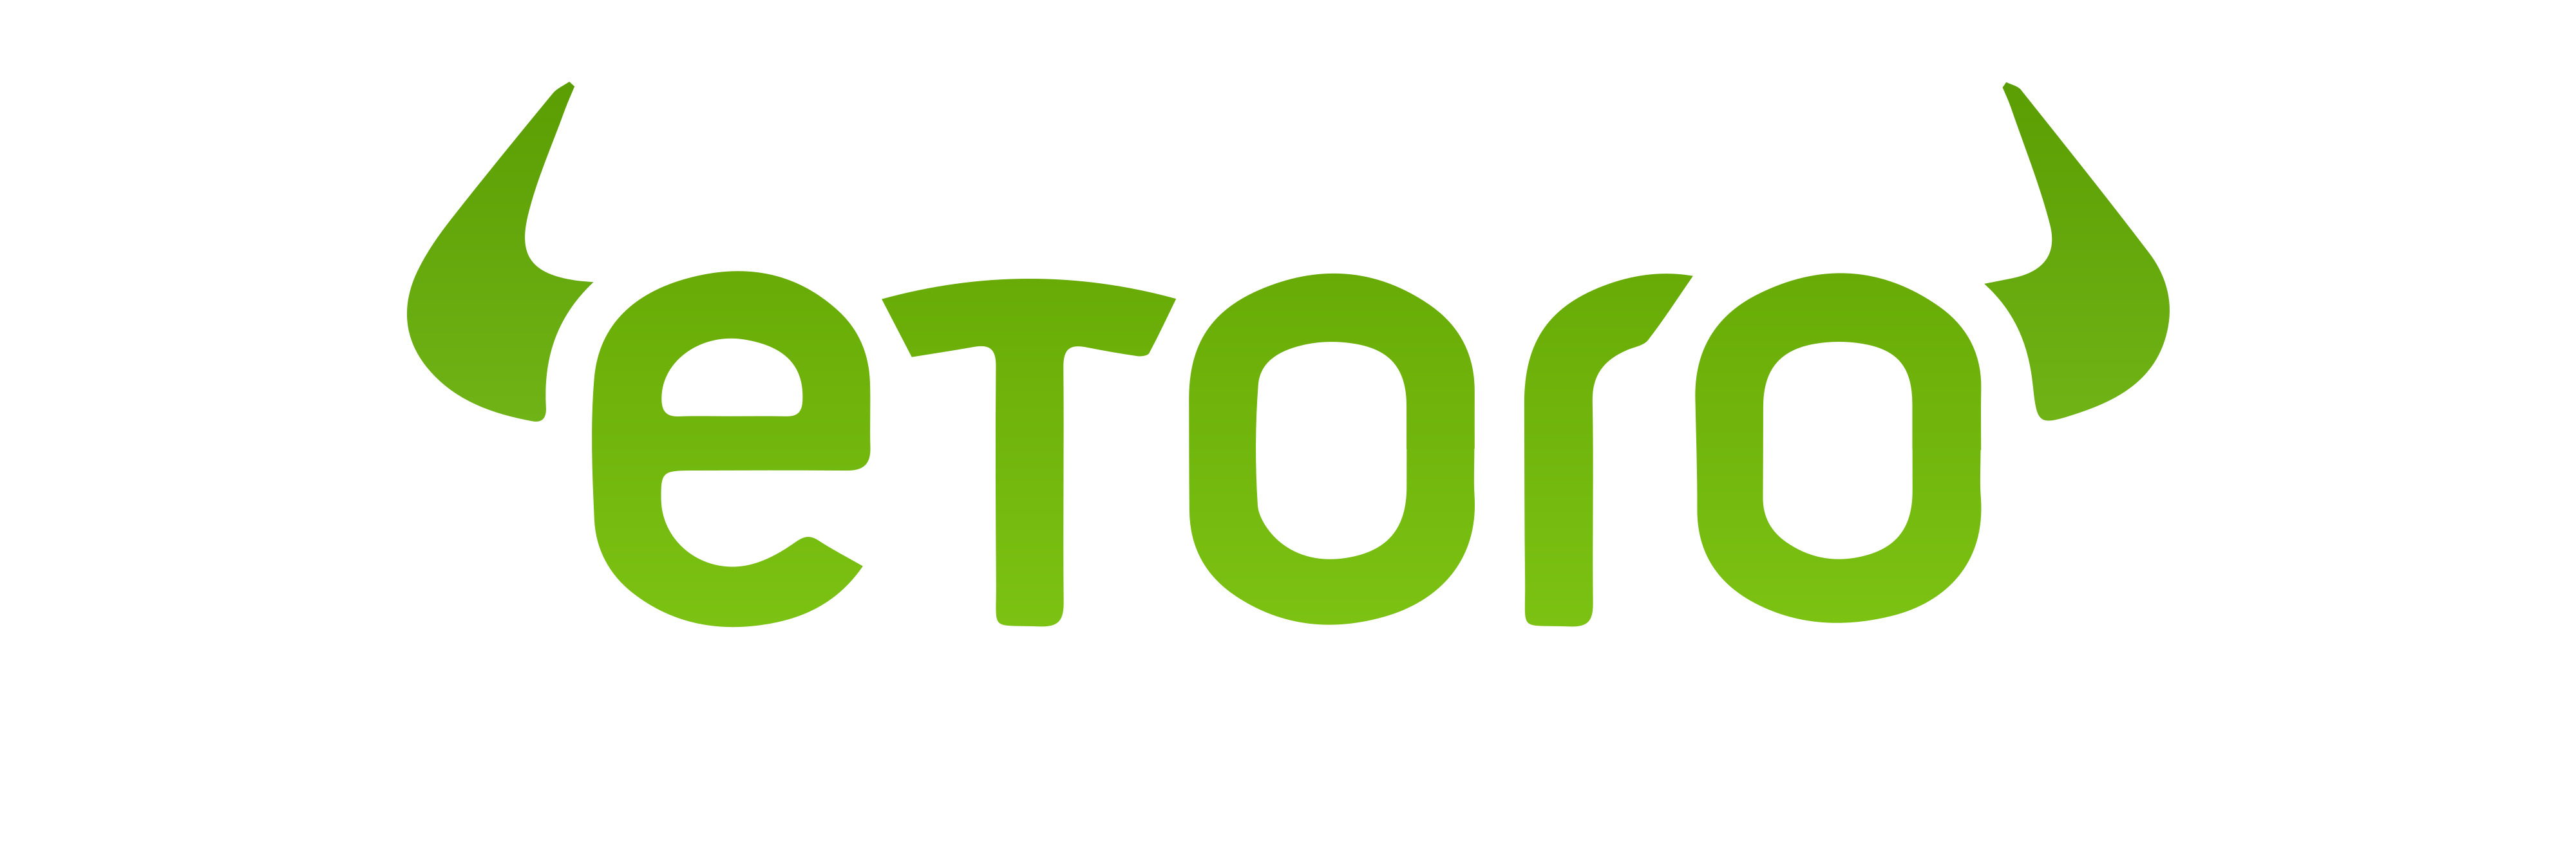 eToro logo - download.